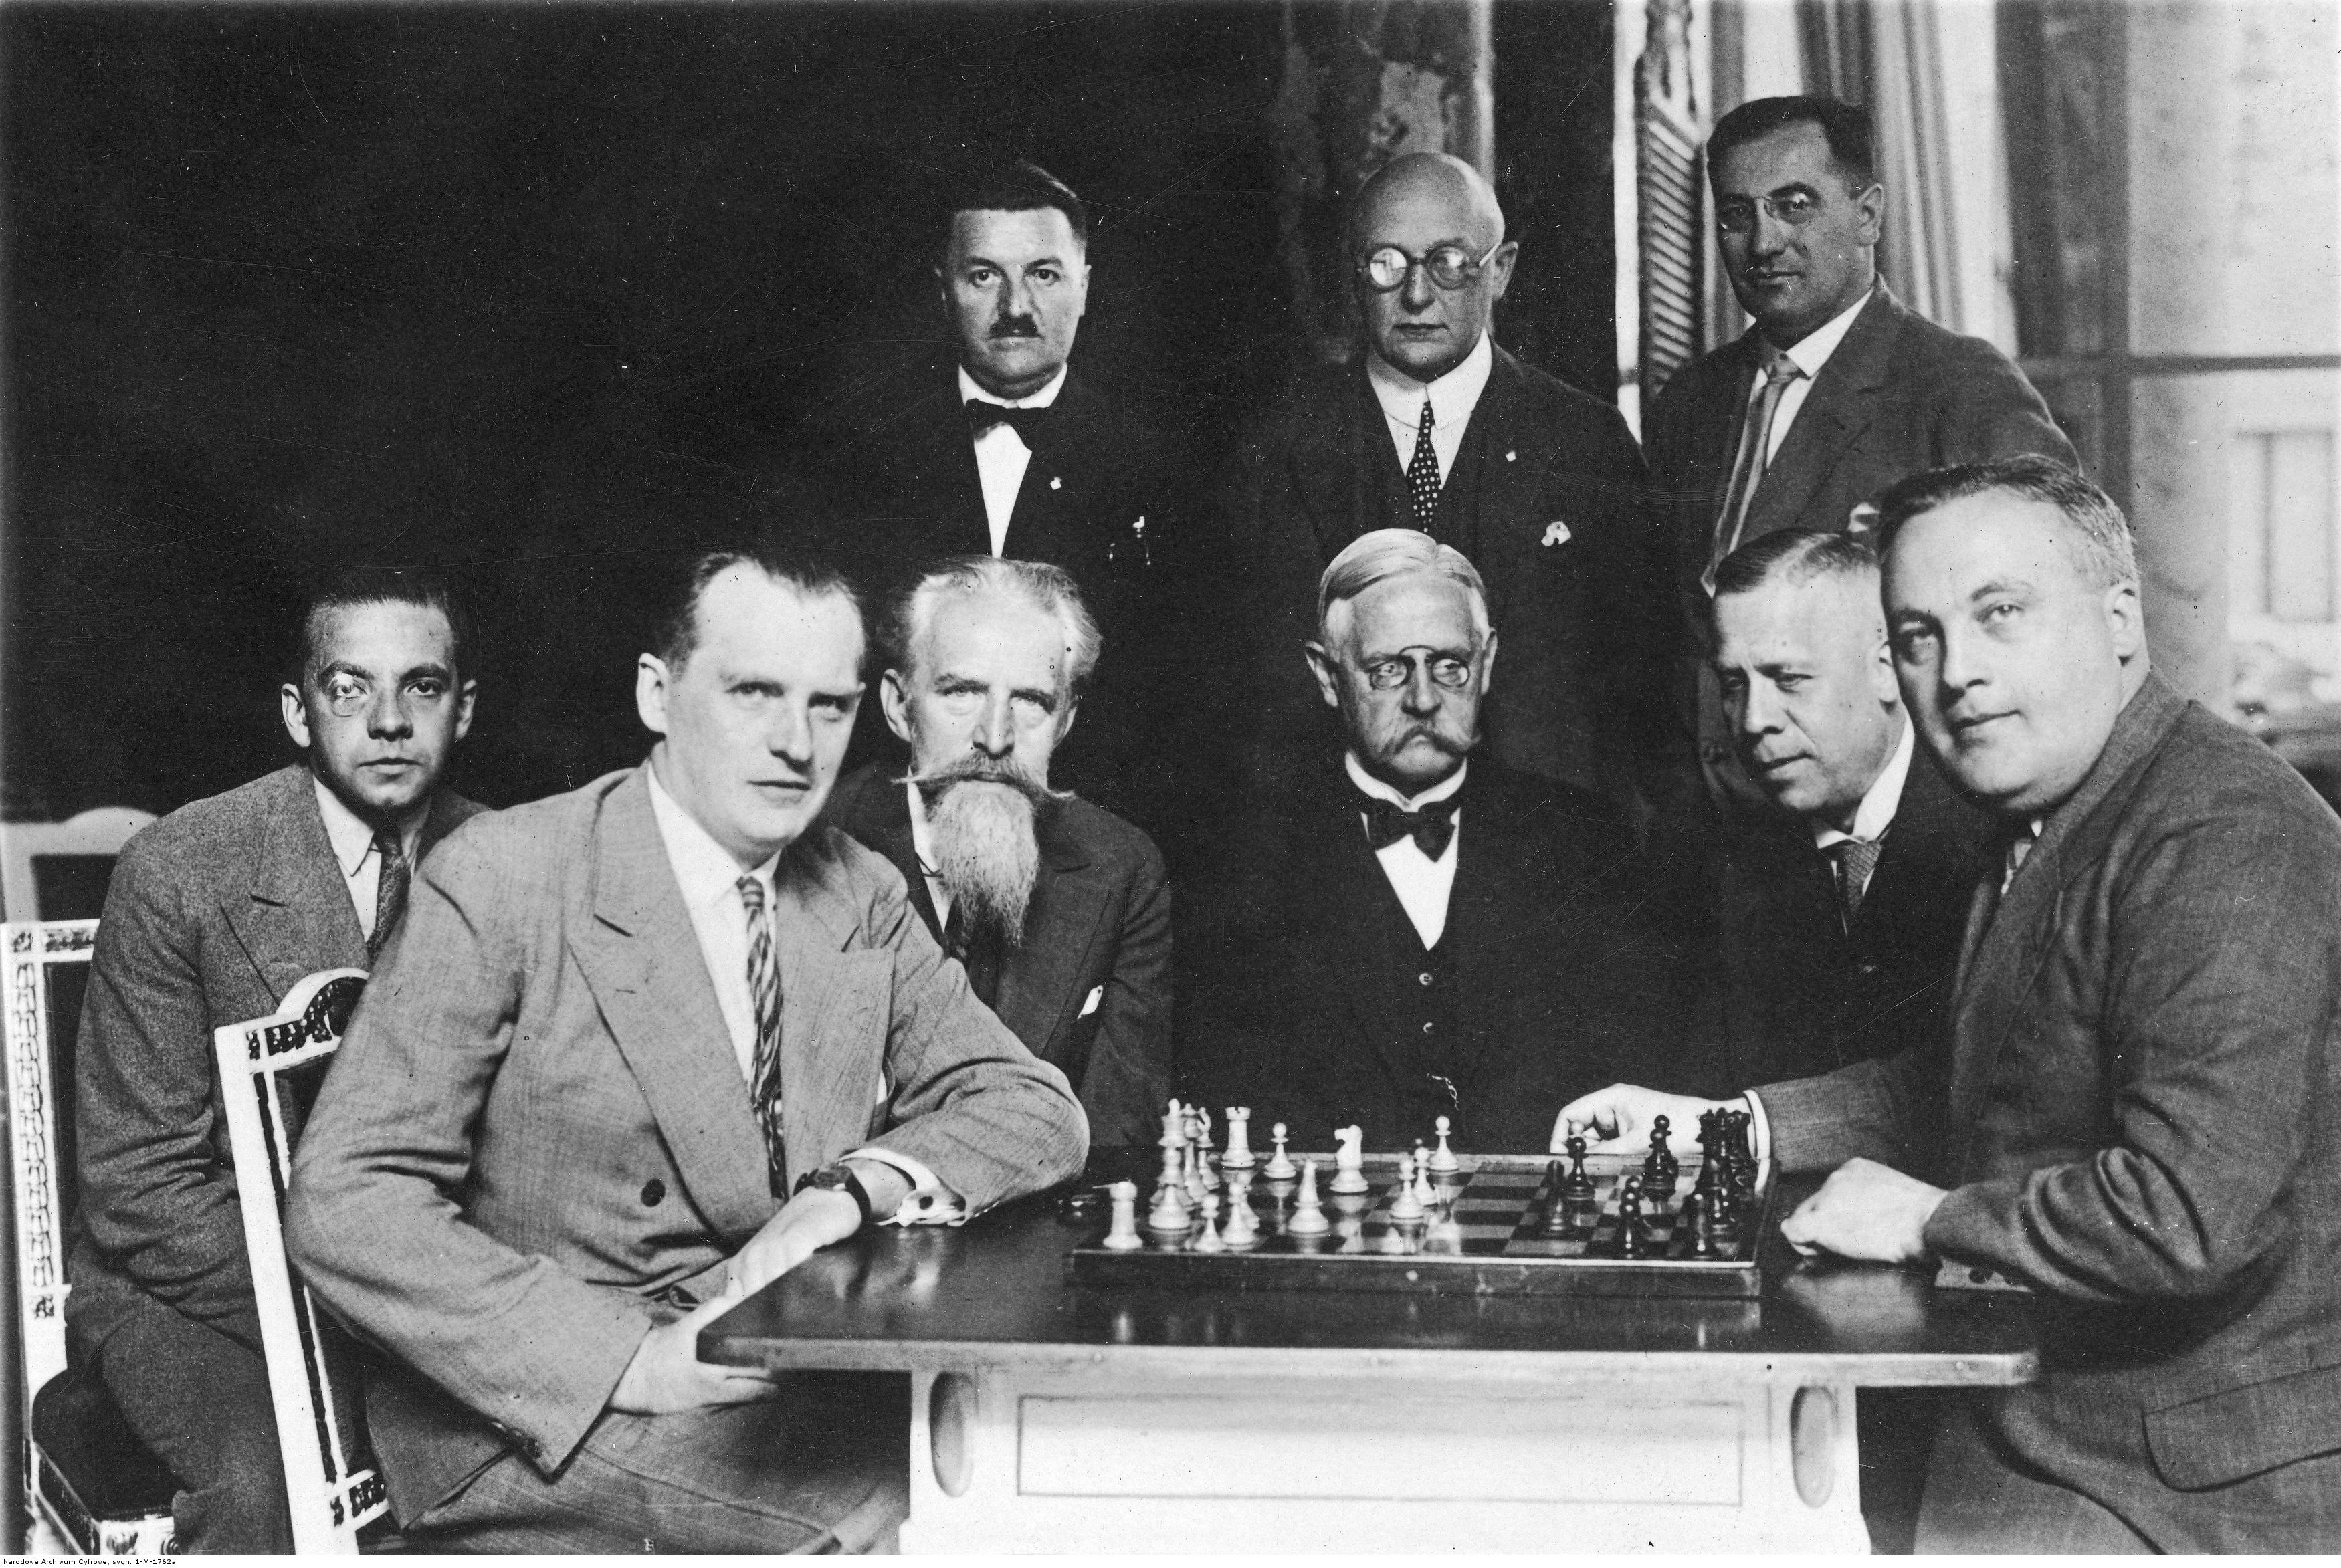 Encounter With Alekhine – The Forward